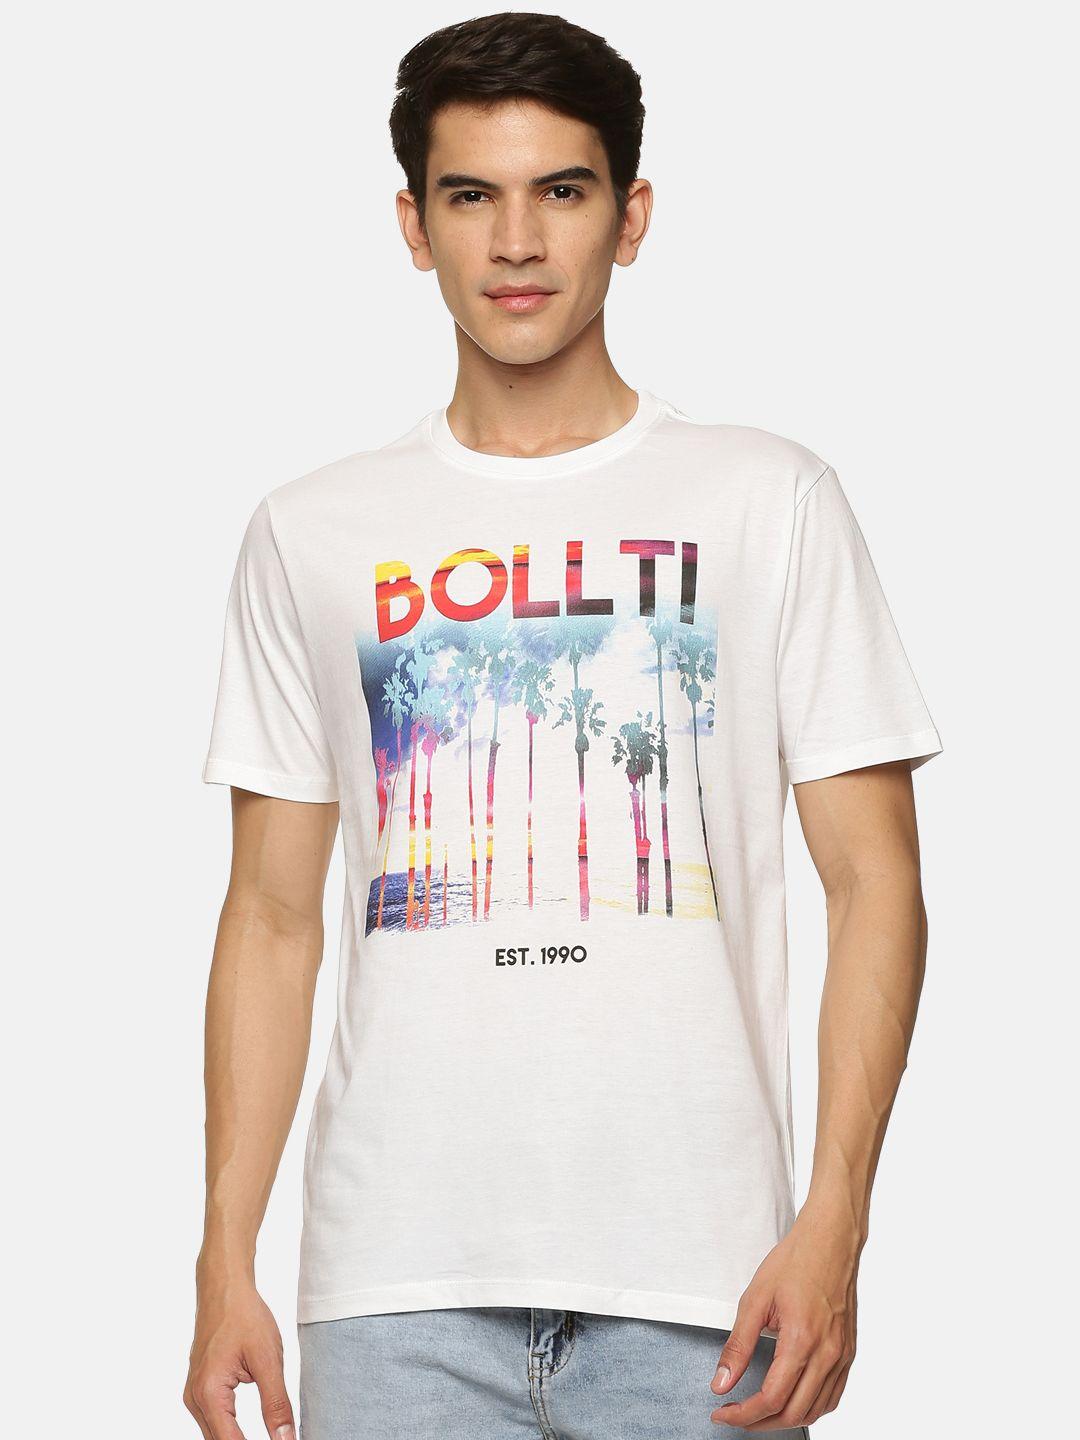 bollti graphic printed round neck cotton t-shirt